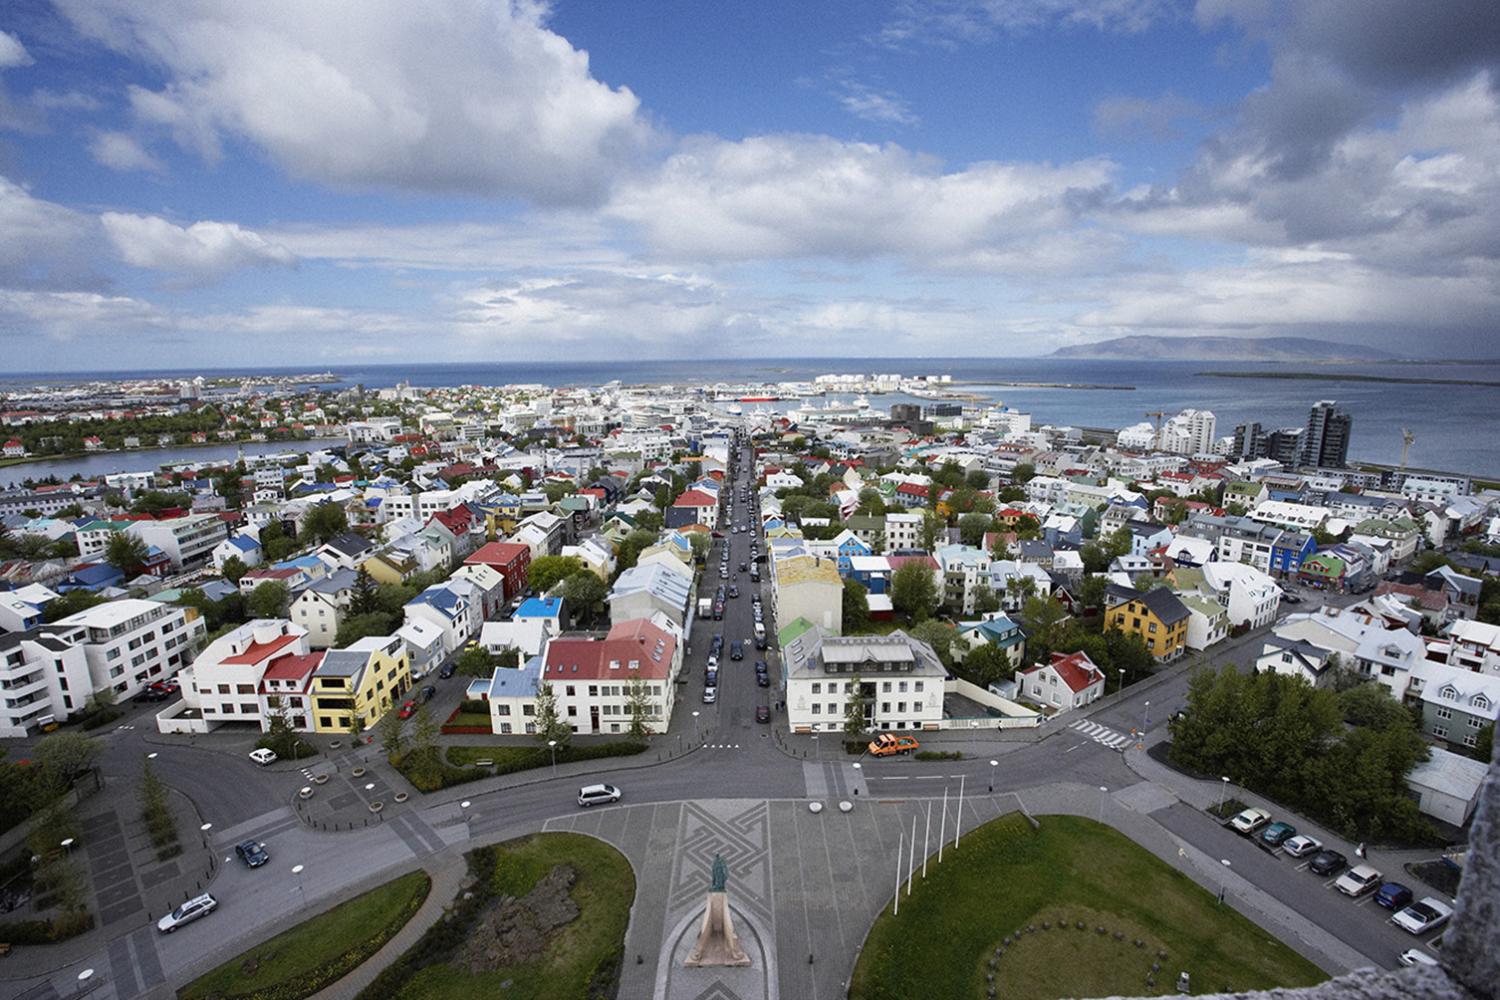 Reykjavik city sightseeing tour - by minibus over Reykjavík